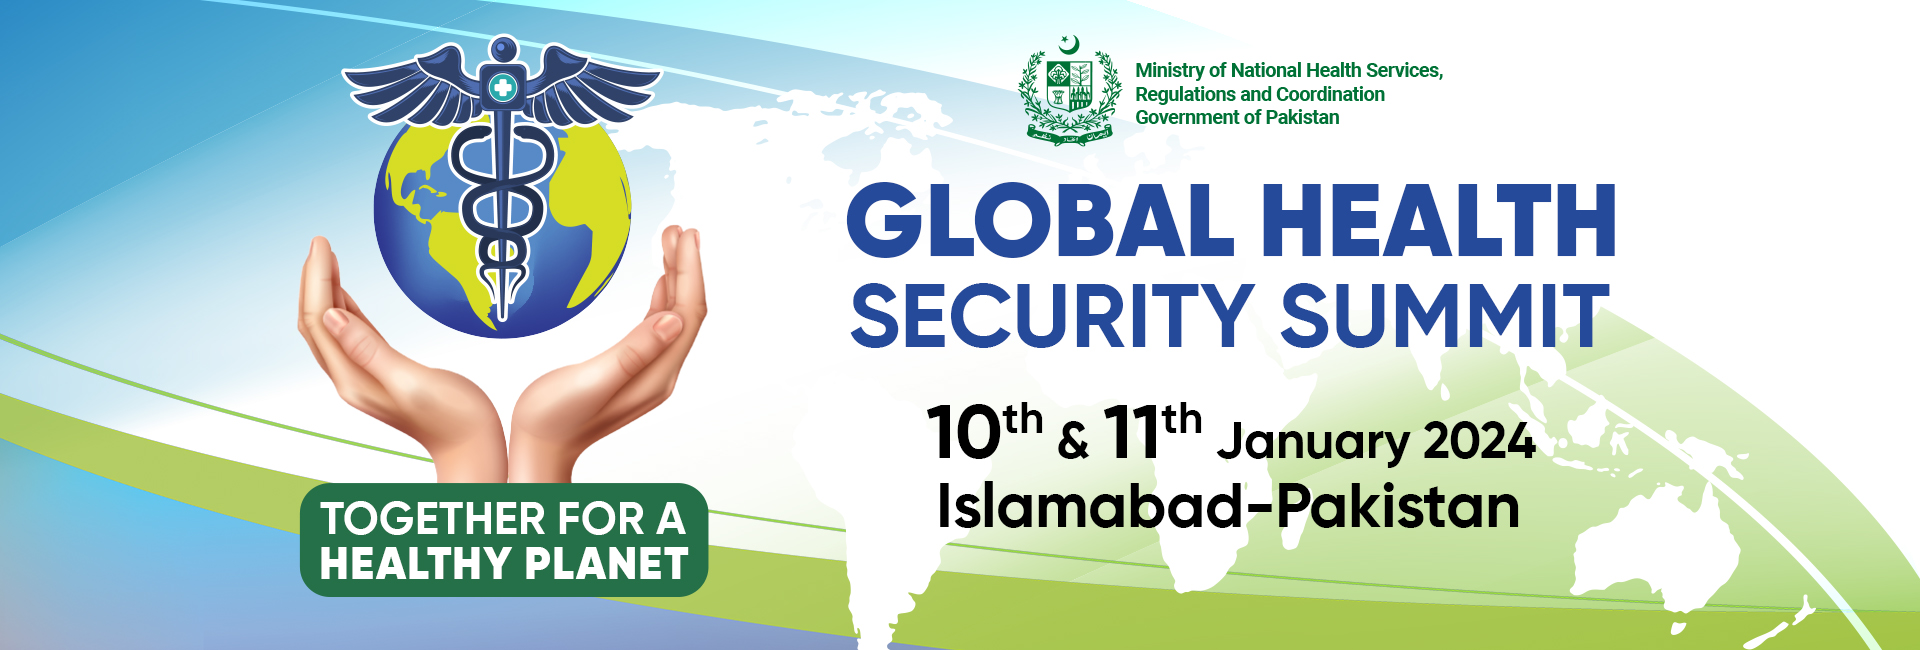 Global Health Security Summit 2023 in Pakistan